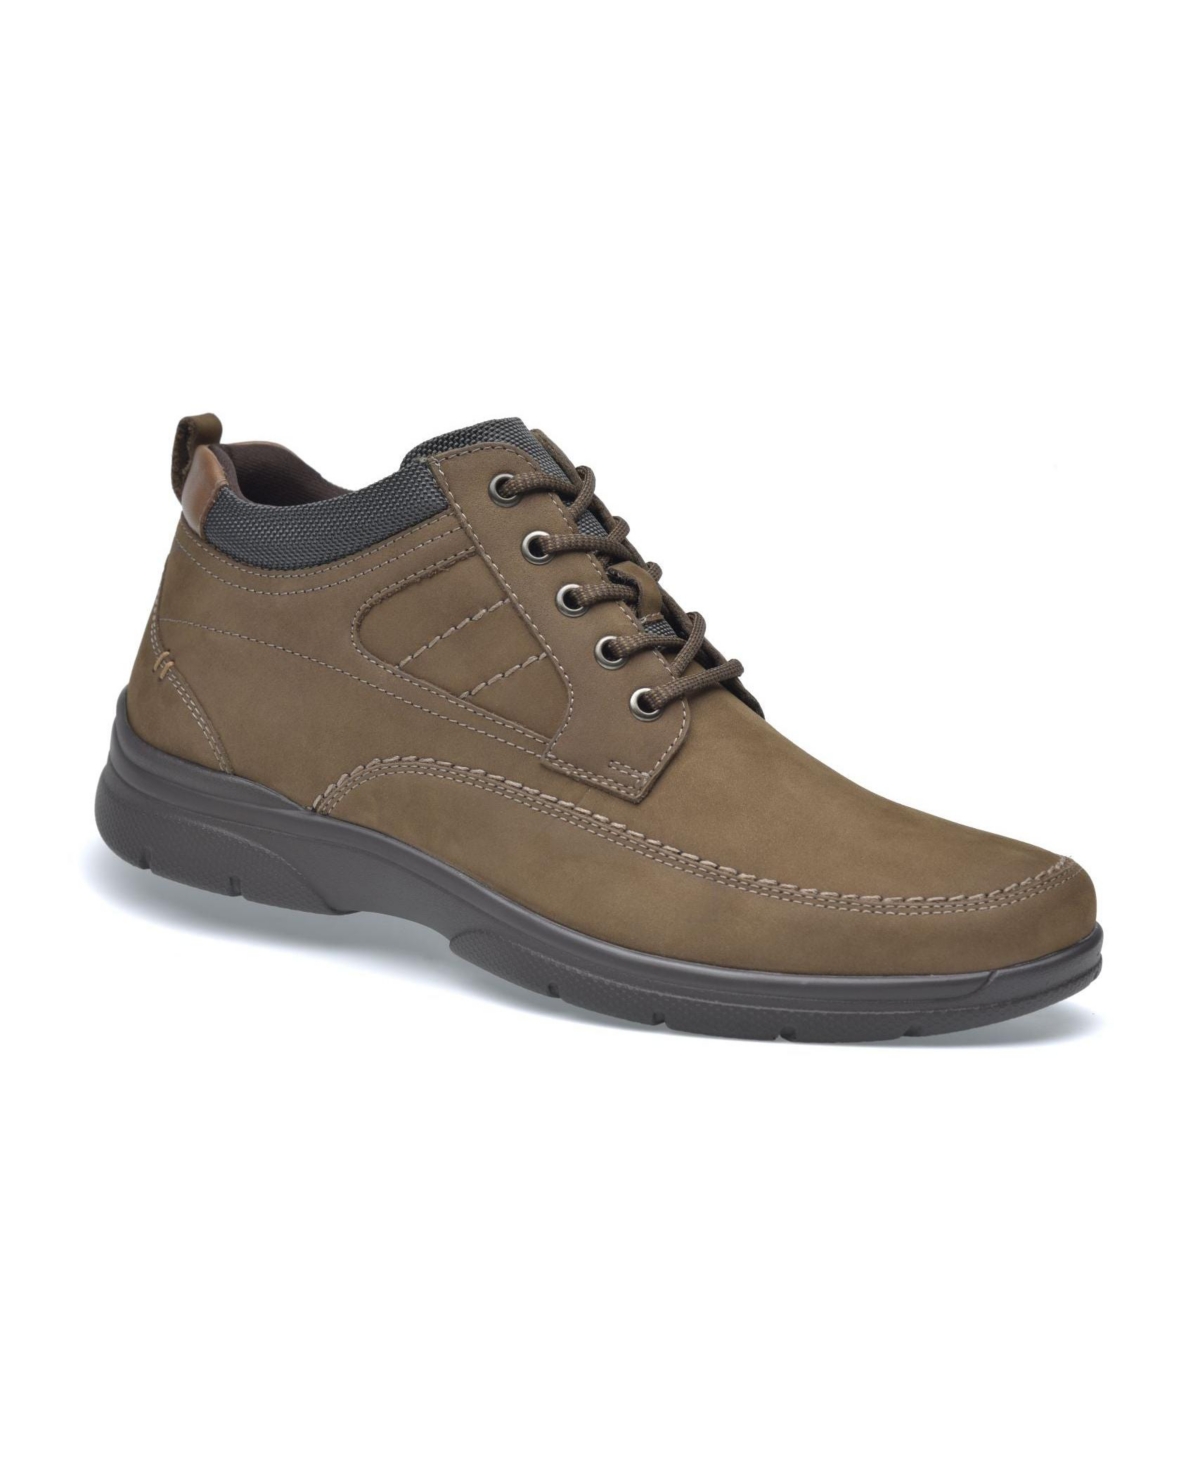 Men's Premium Comfort Nubuck Leather Boots Gali - Light sand